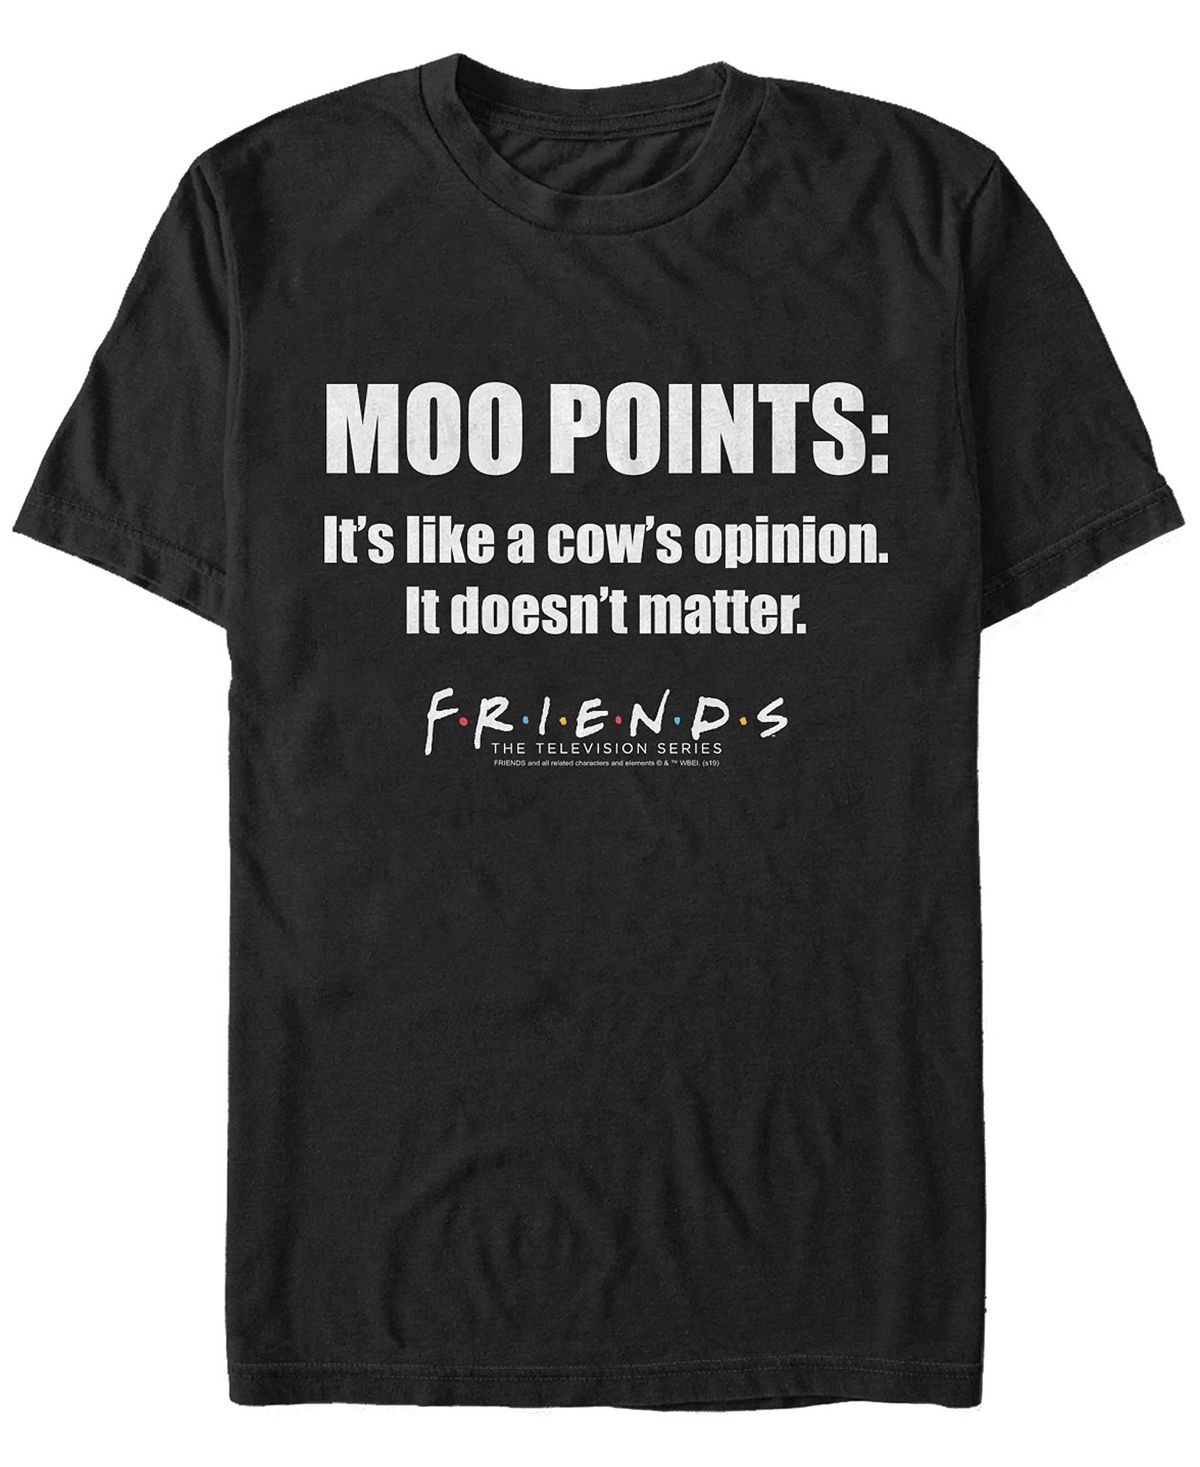 Мужская футболка с короткими рукавами и принтом Moo Points Friends Fifth Sun